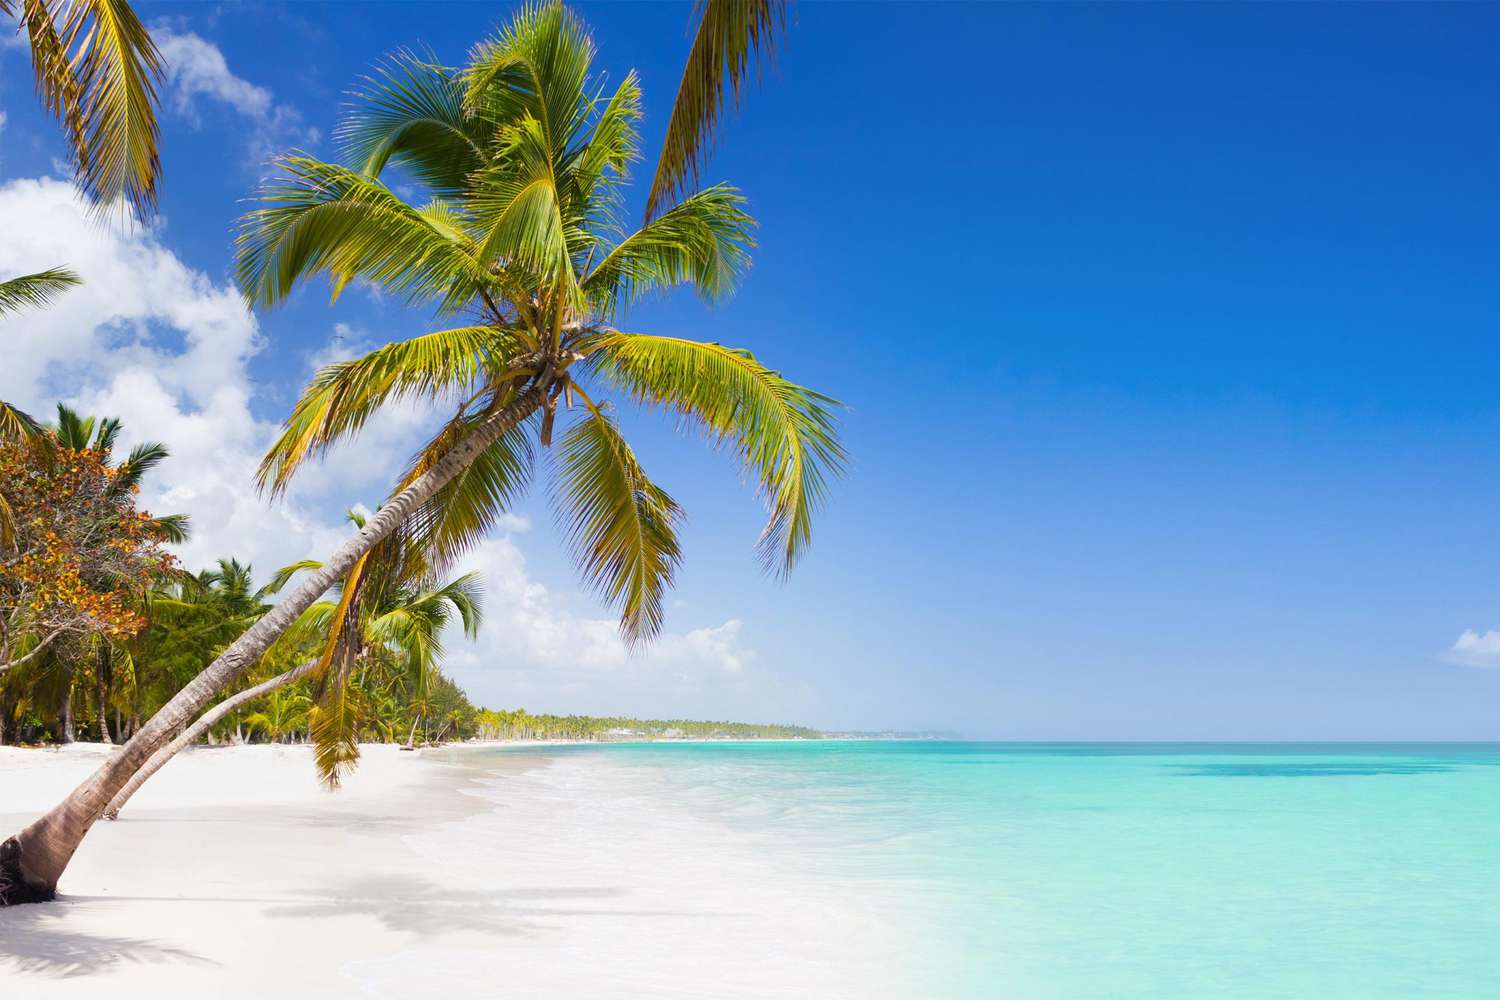 Tropical paradise - palm trees on white sand beach